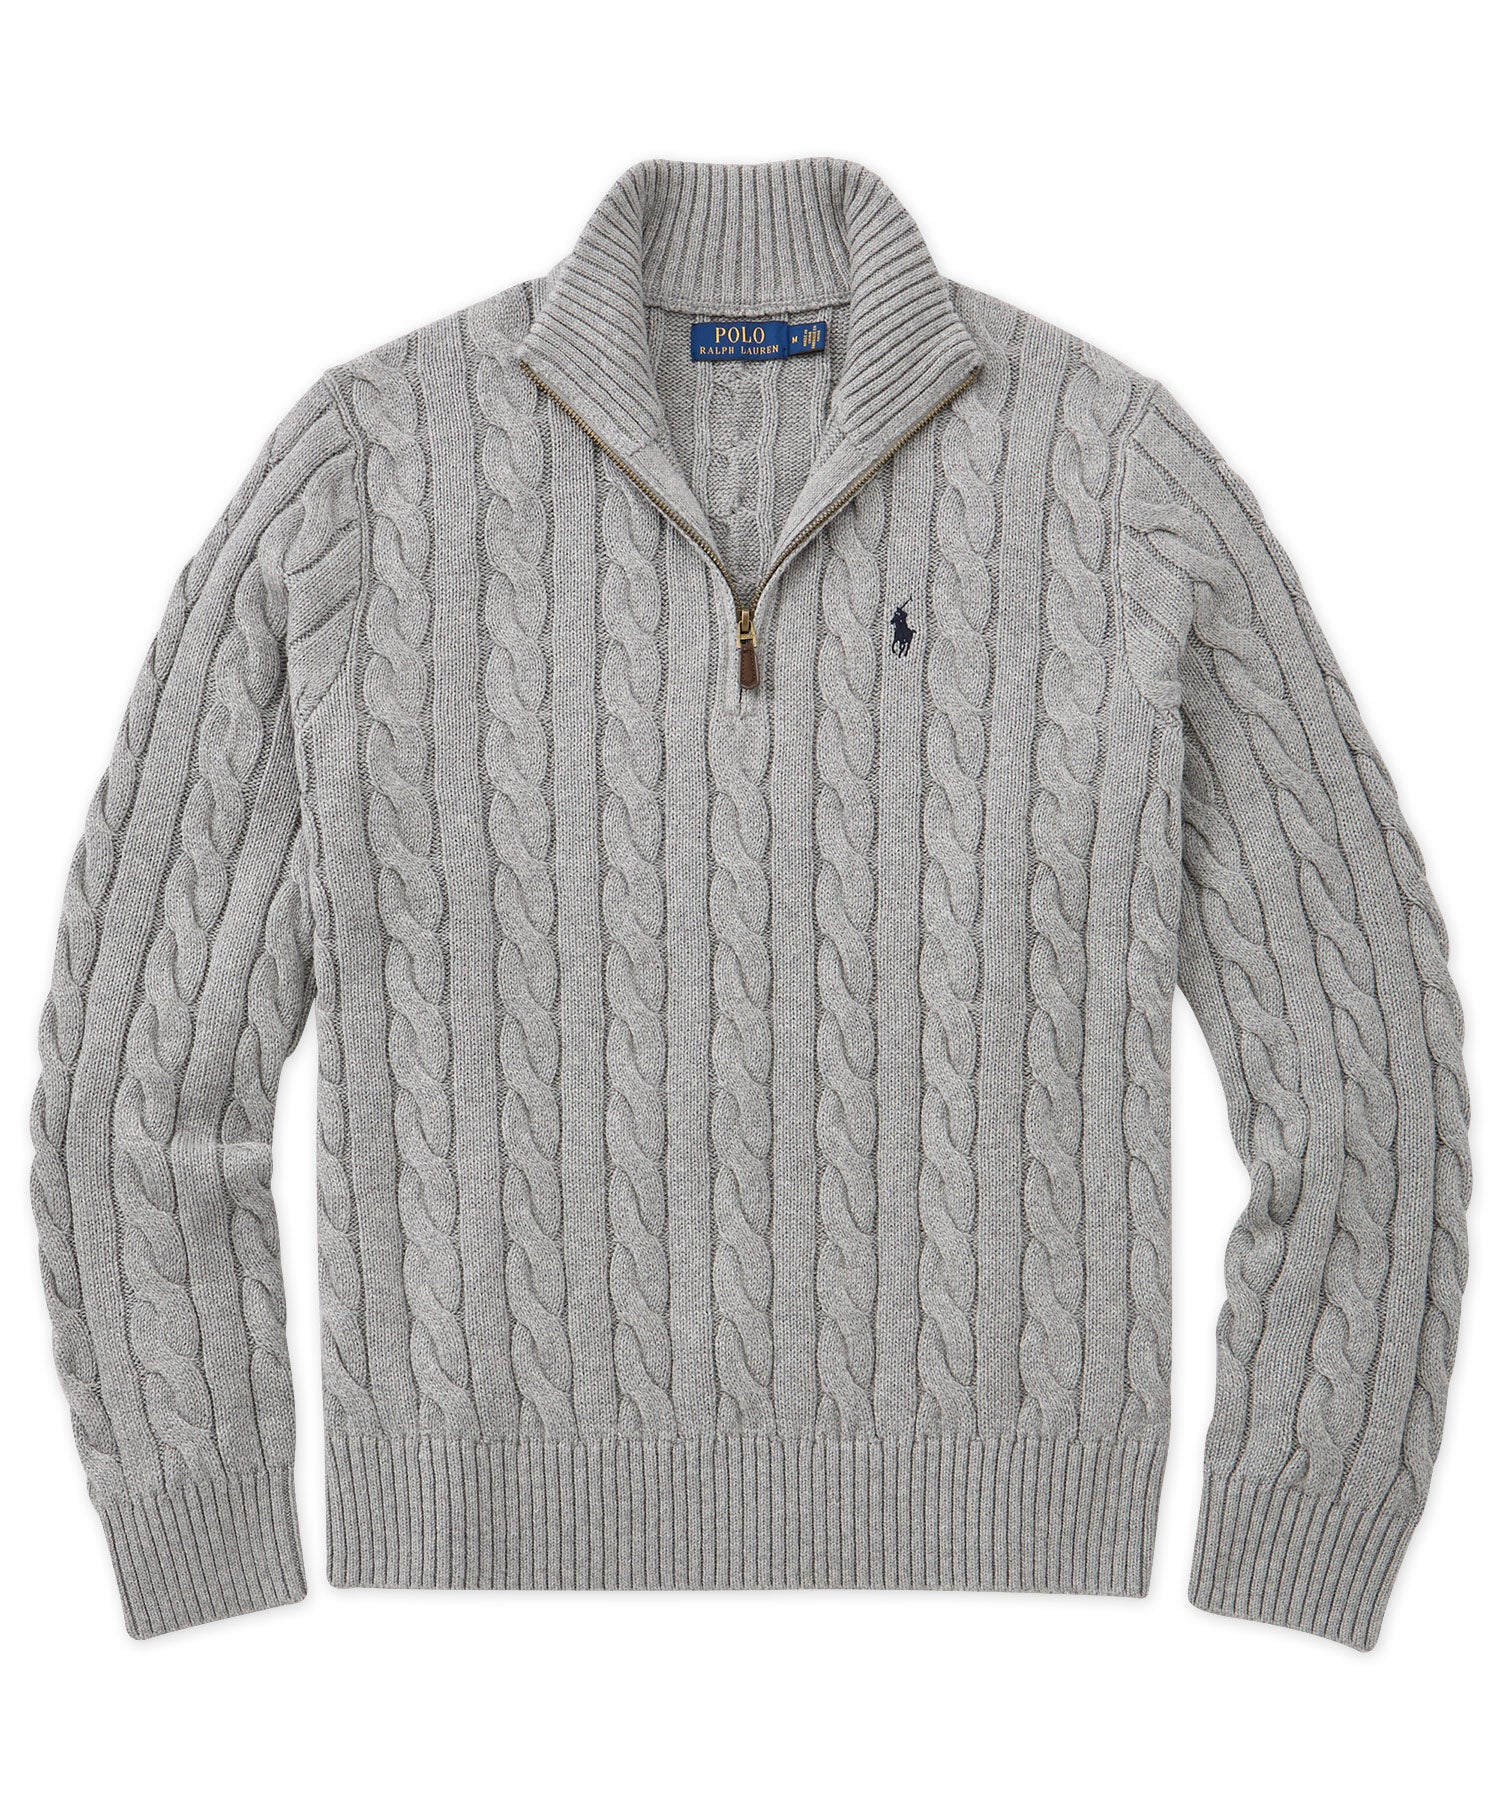 Polo Ralph Lauren Cotton Cable Half-Zip Sweater, Men's Big & Tall